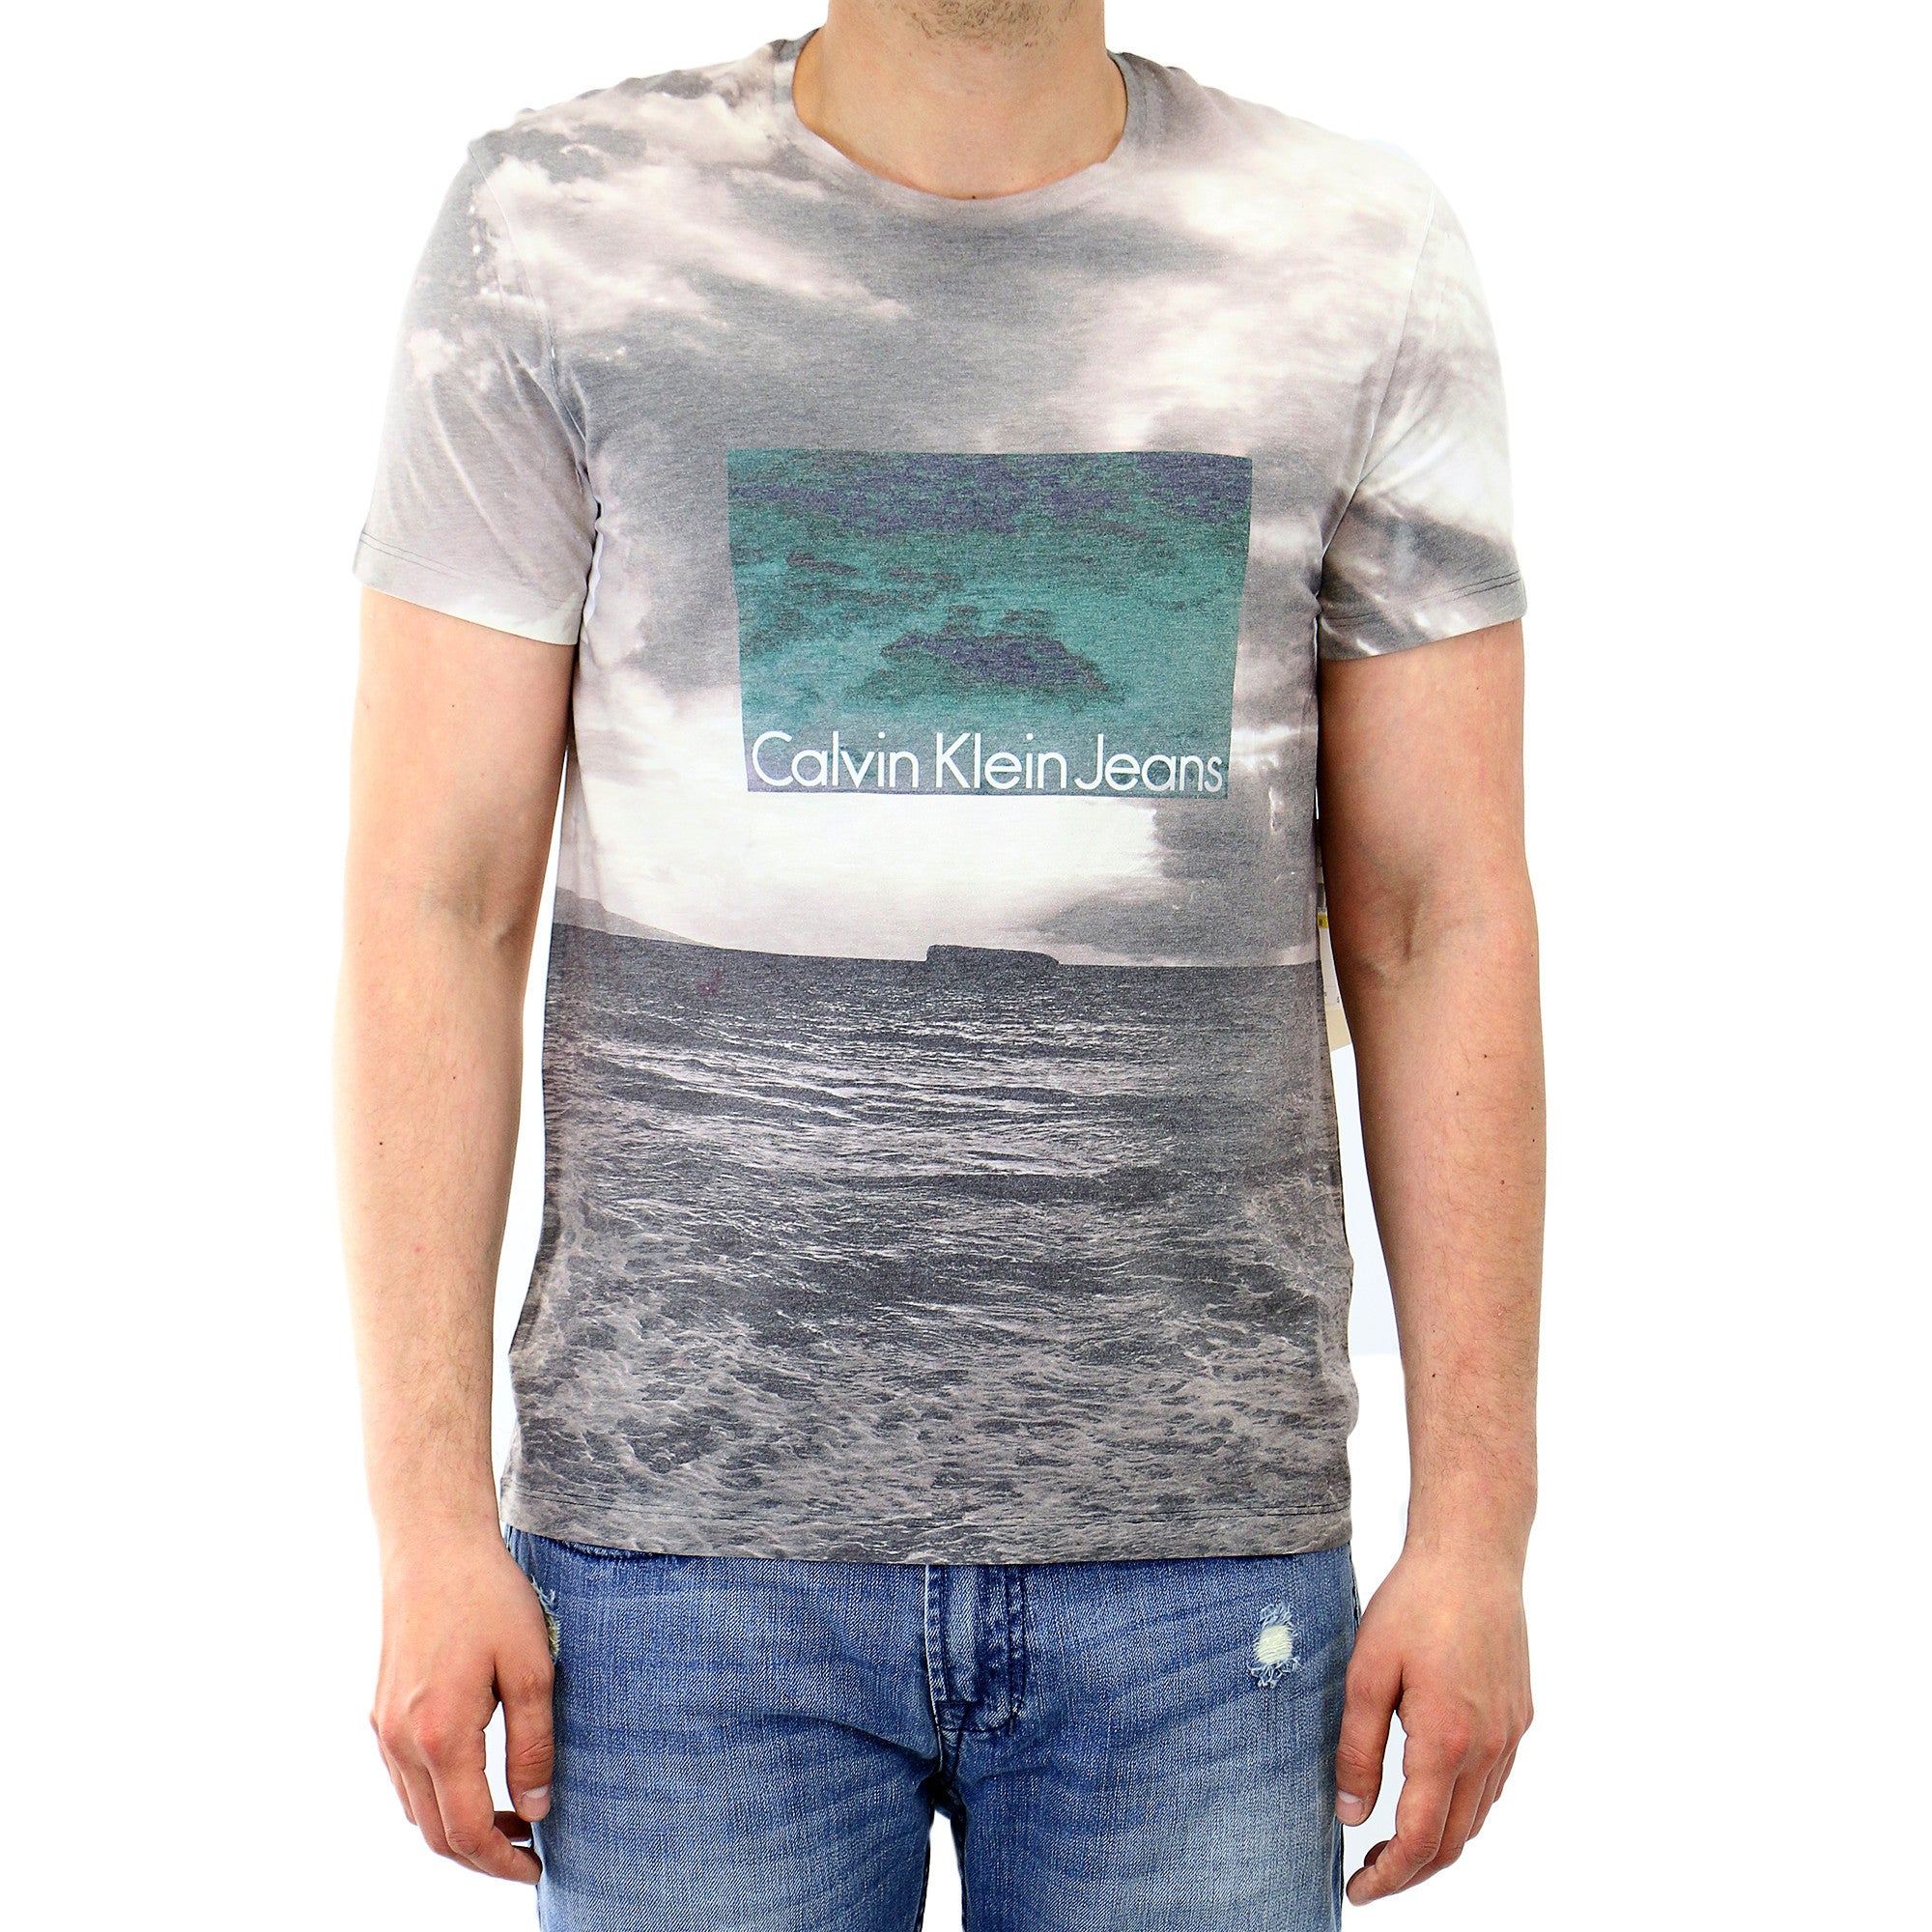 Calvin Klein T-Shirt - Shark Shirts